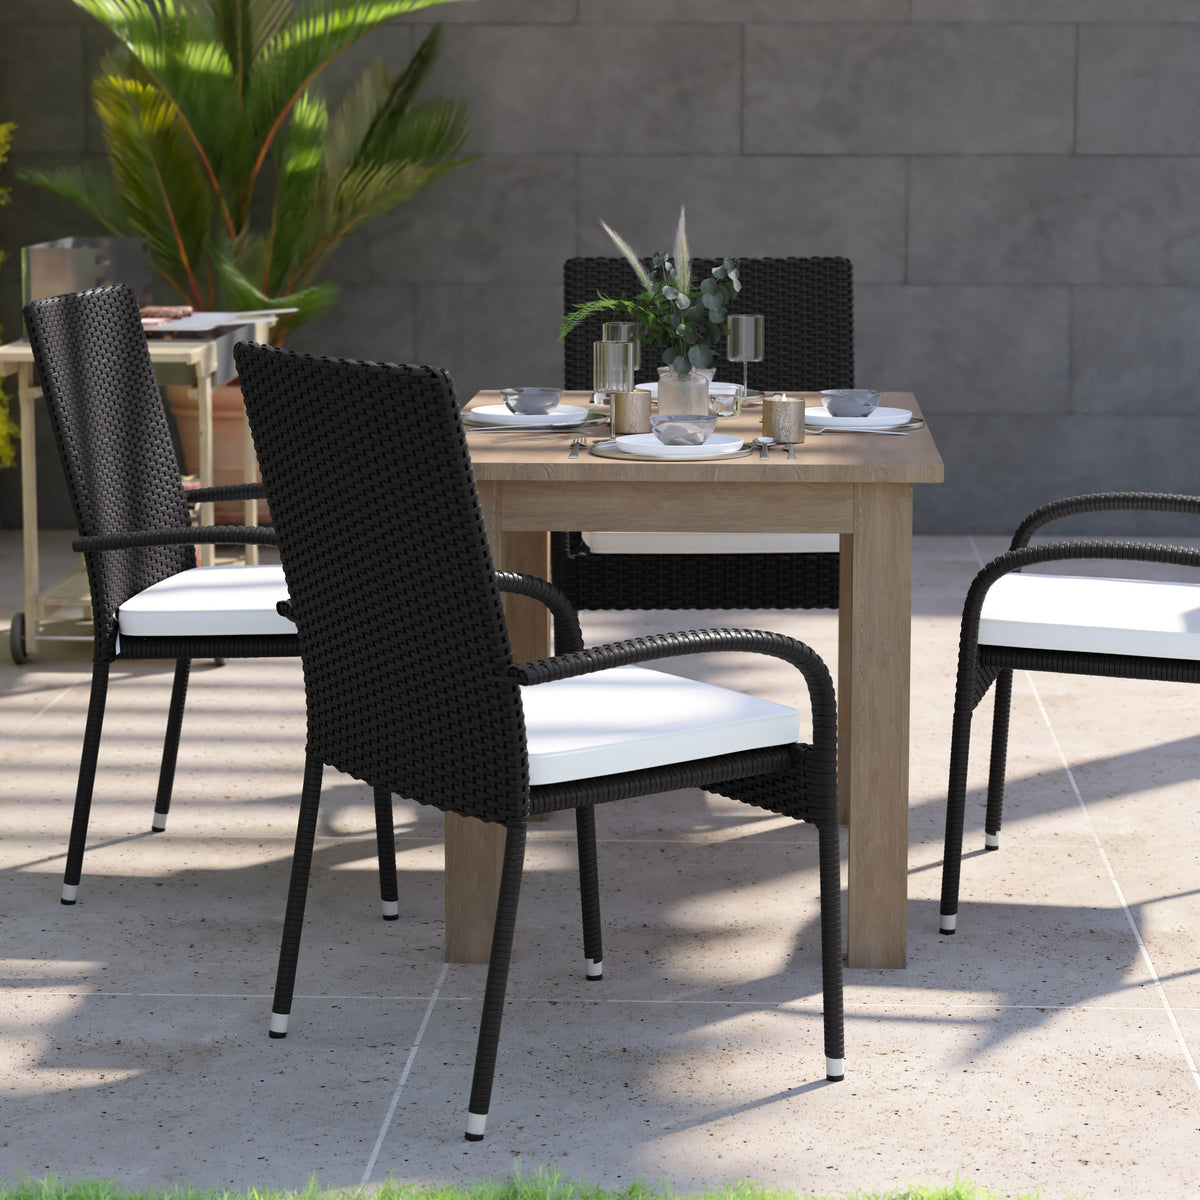 Cream Cushions/Black Frame |#| Set of 4 Indoor/Outdoor Patio Chairs with 1.25" Thick Cushions - Black/Cream